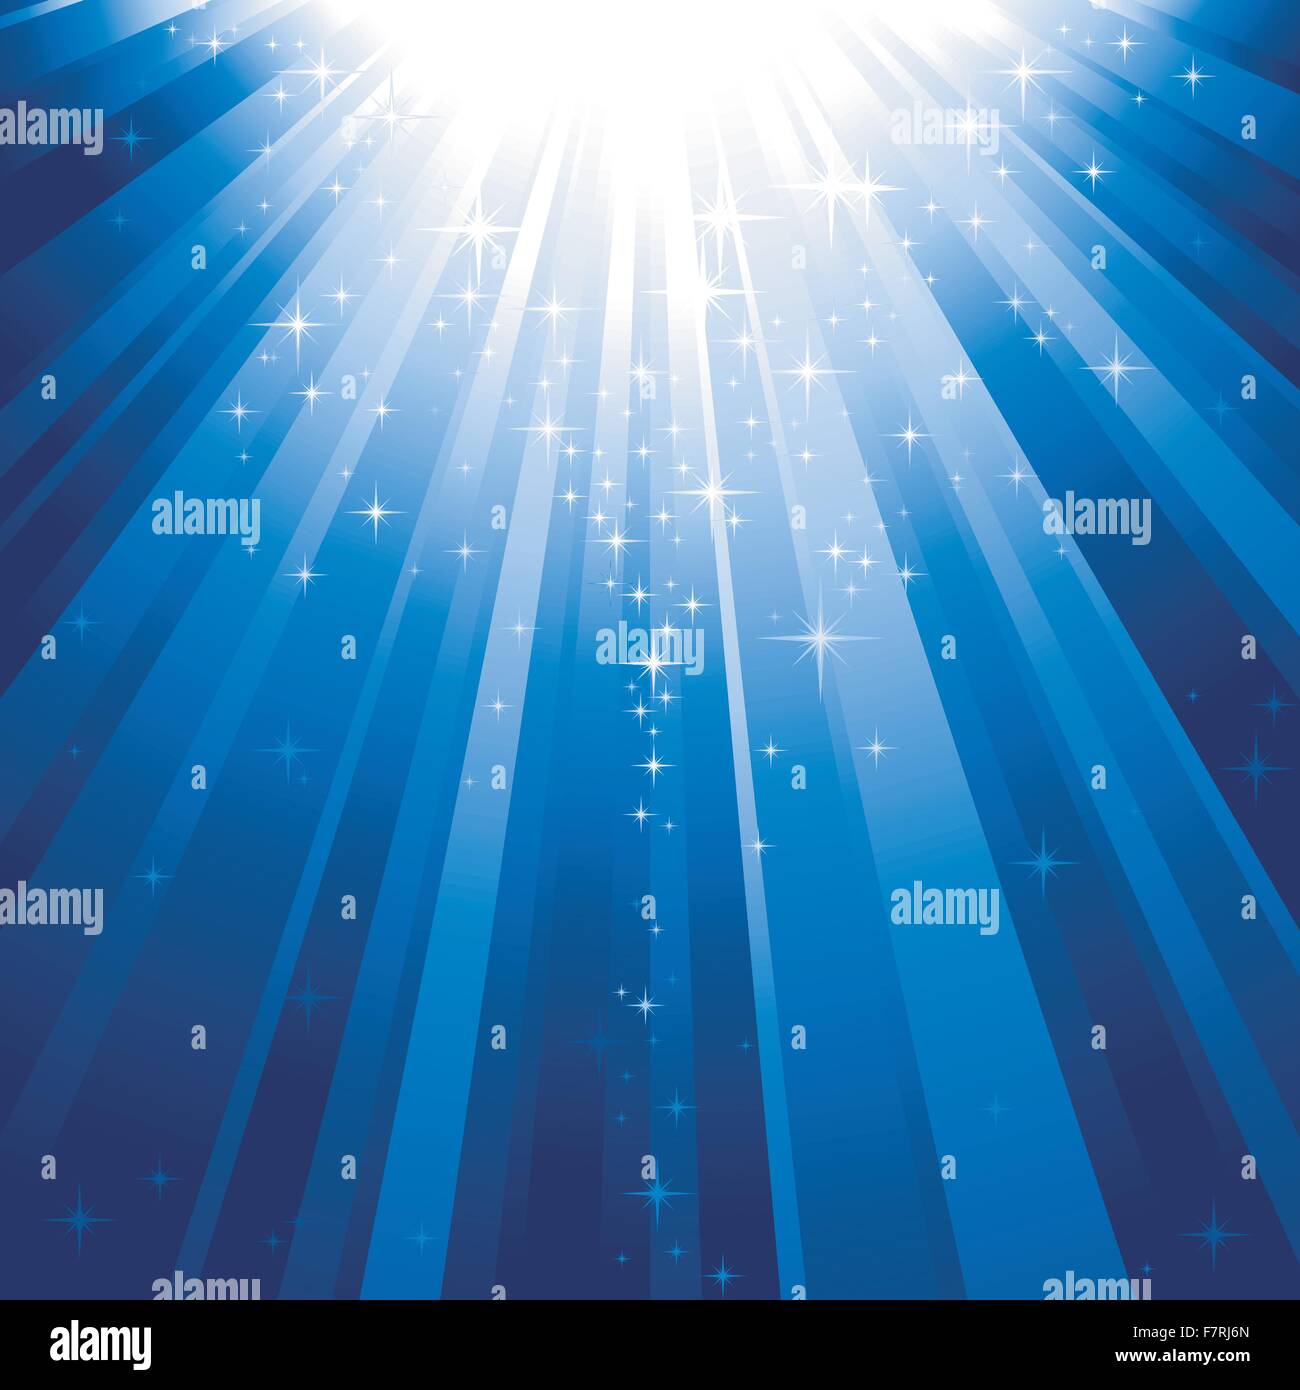 Magic stars descending on beams of light Stock Vector